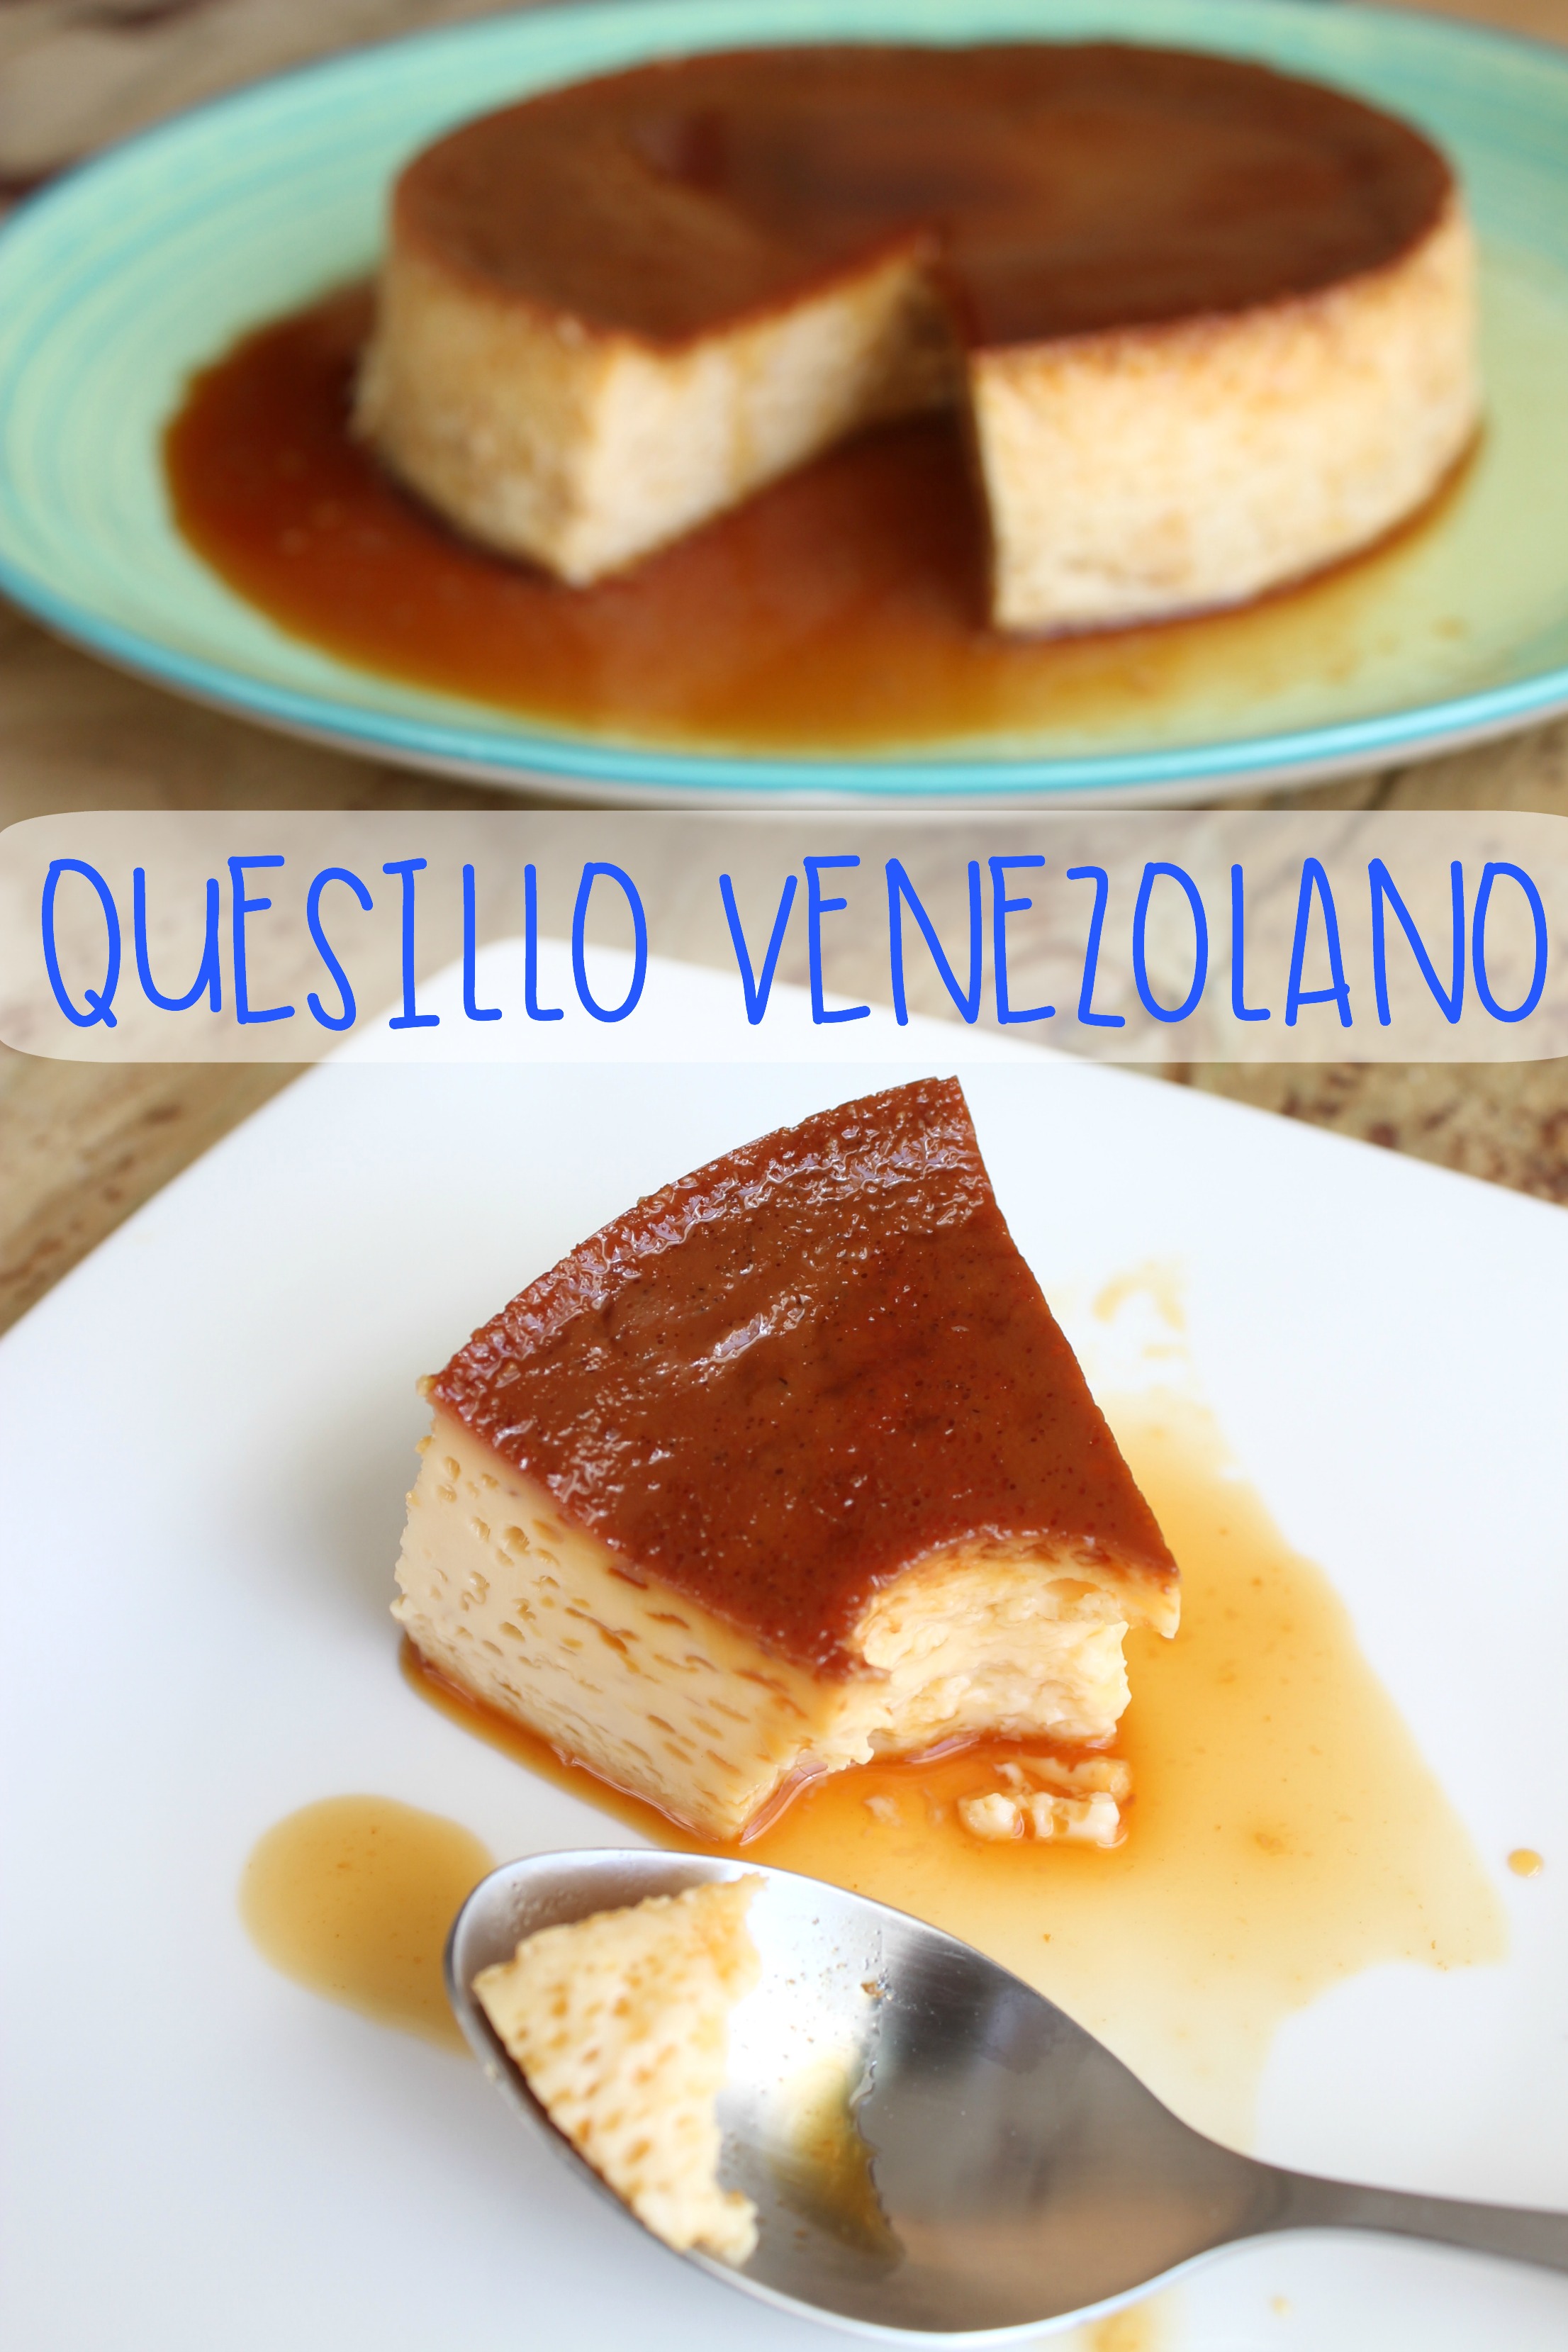 La mejor receta de Quesillo venezolano tradicional perfecto